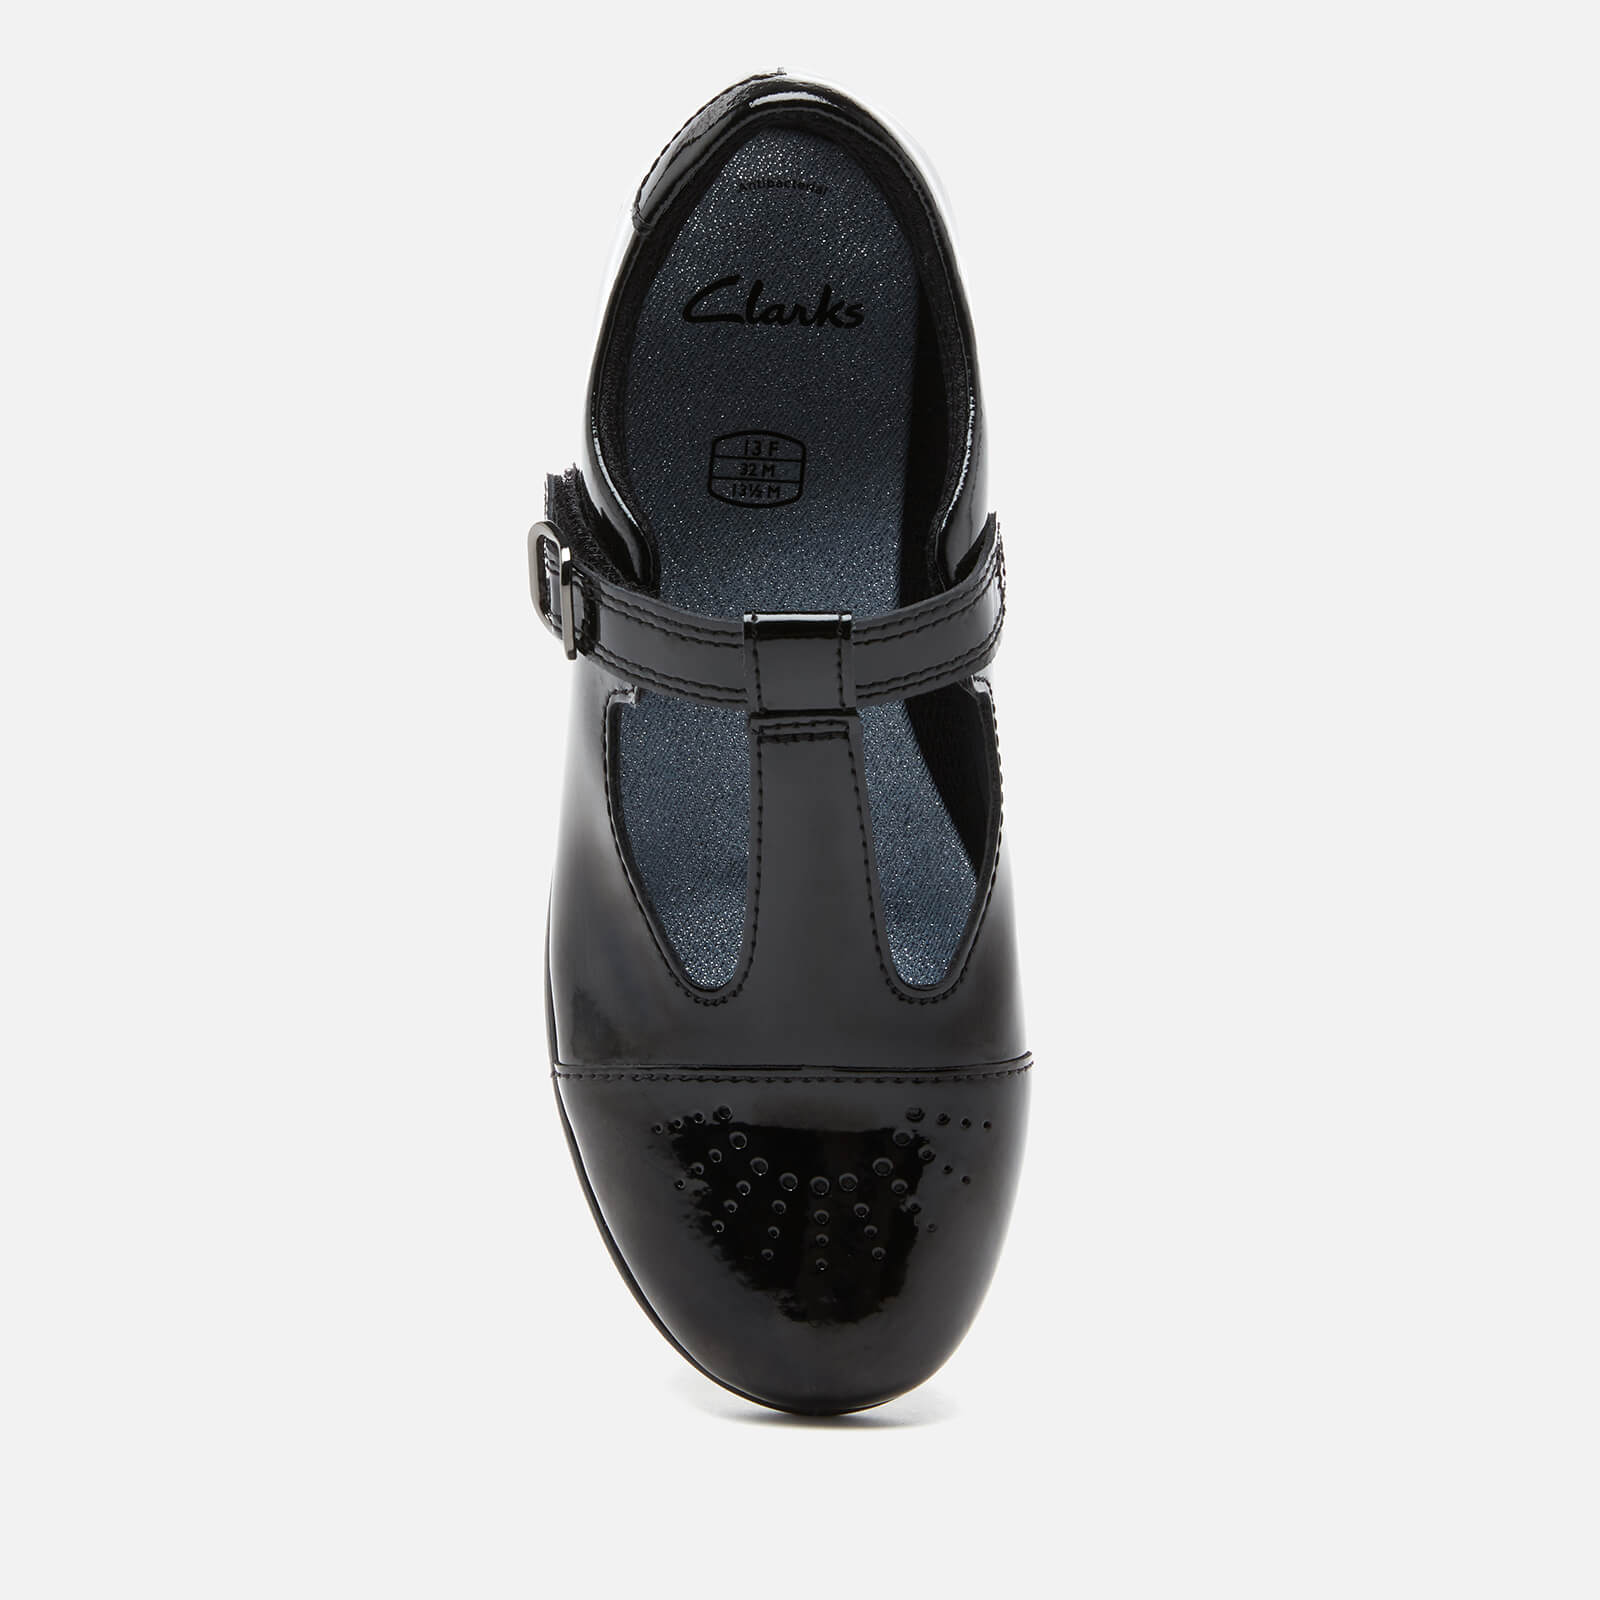 clarks kids' scala spirit school shoes - black pat - uk 10 kids